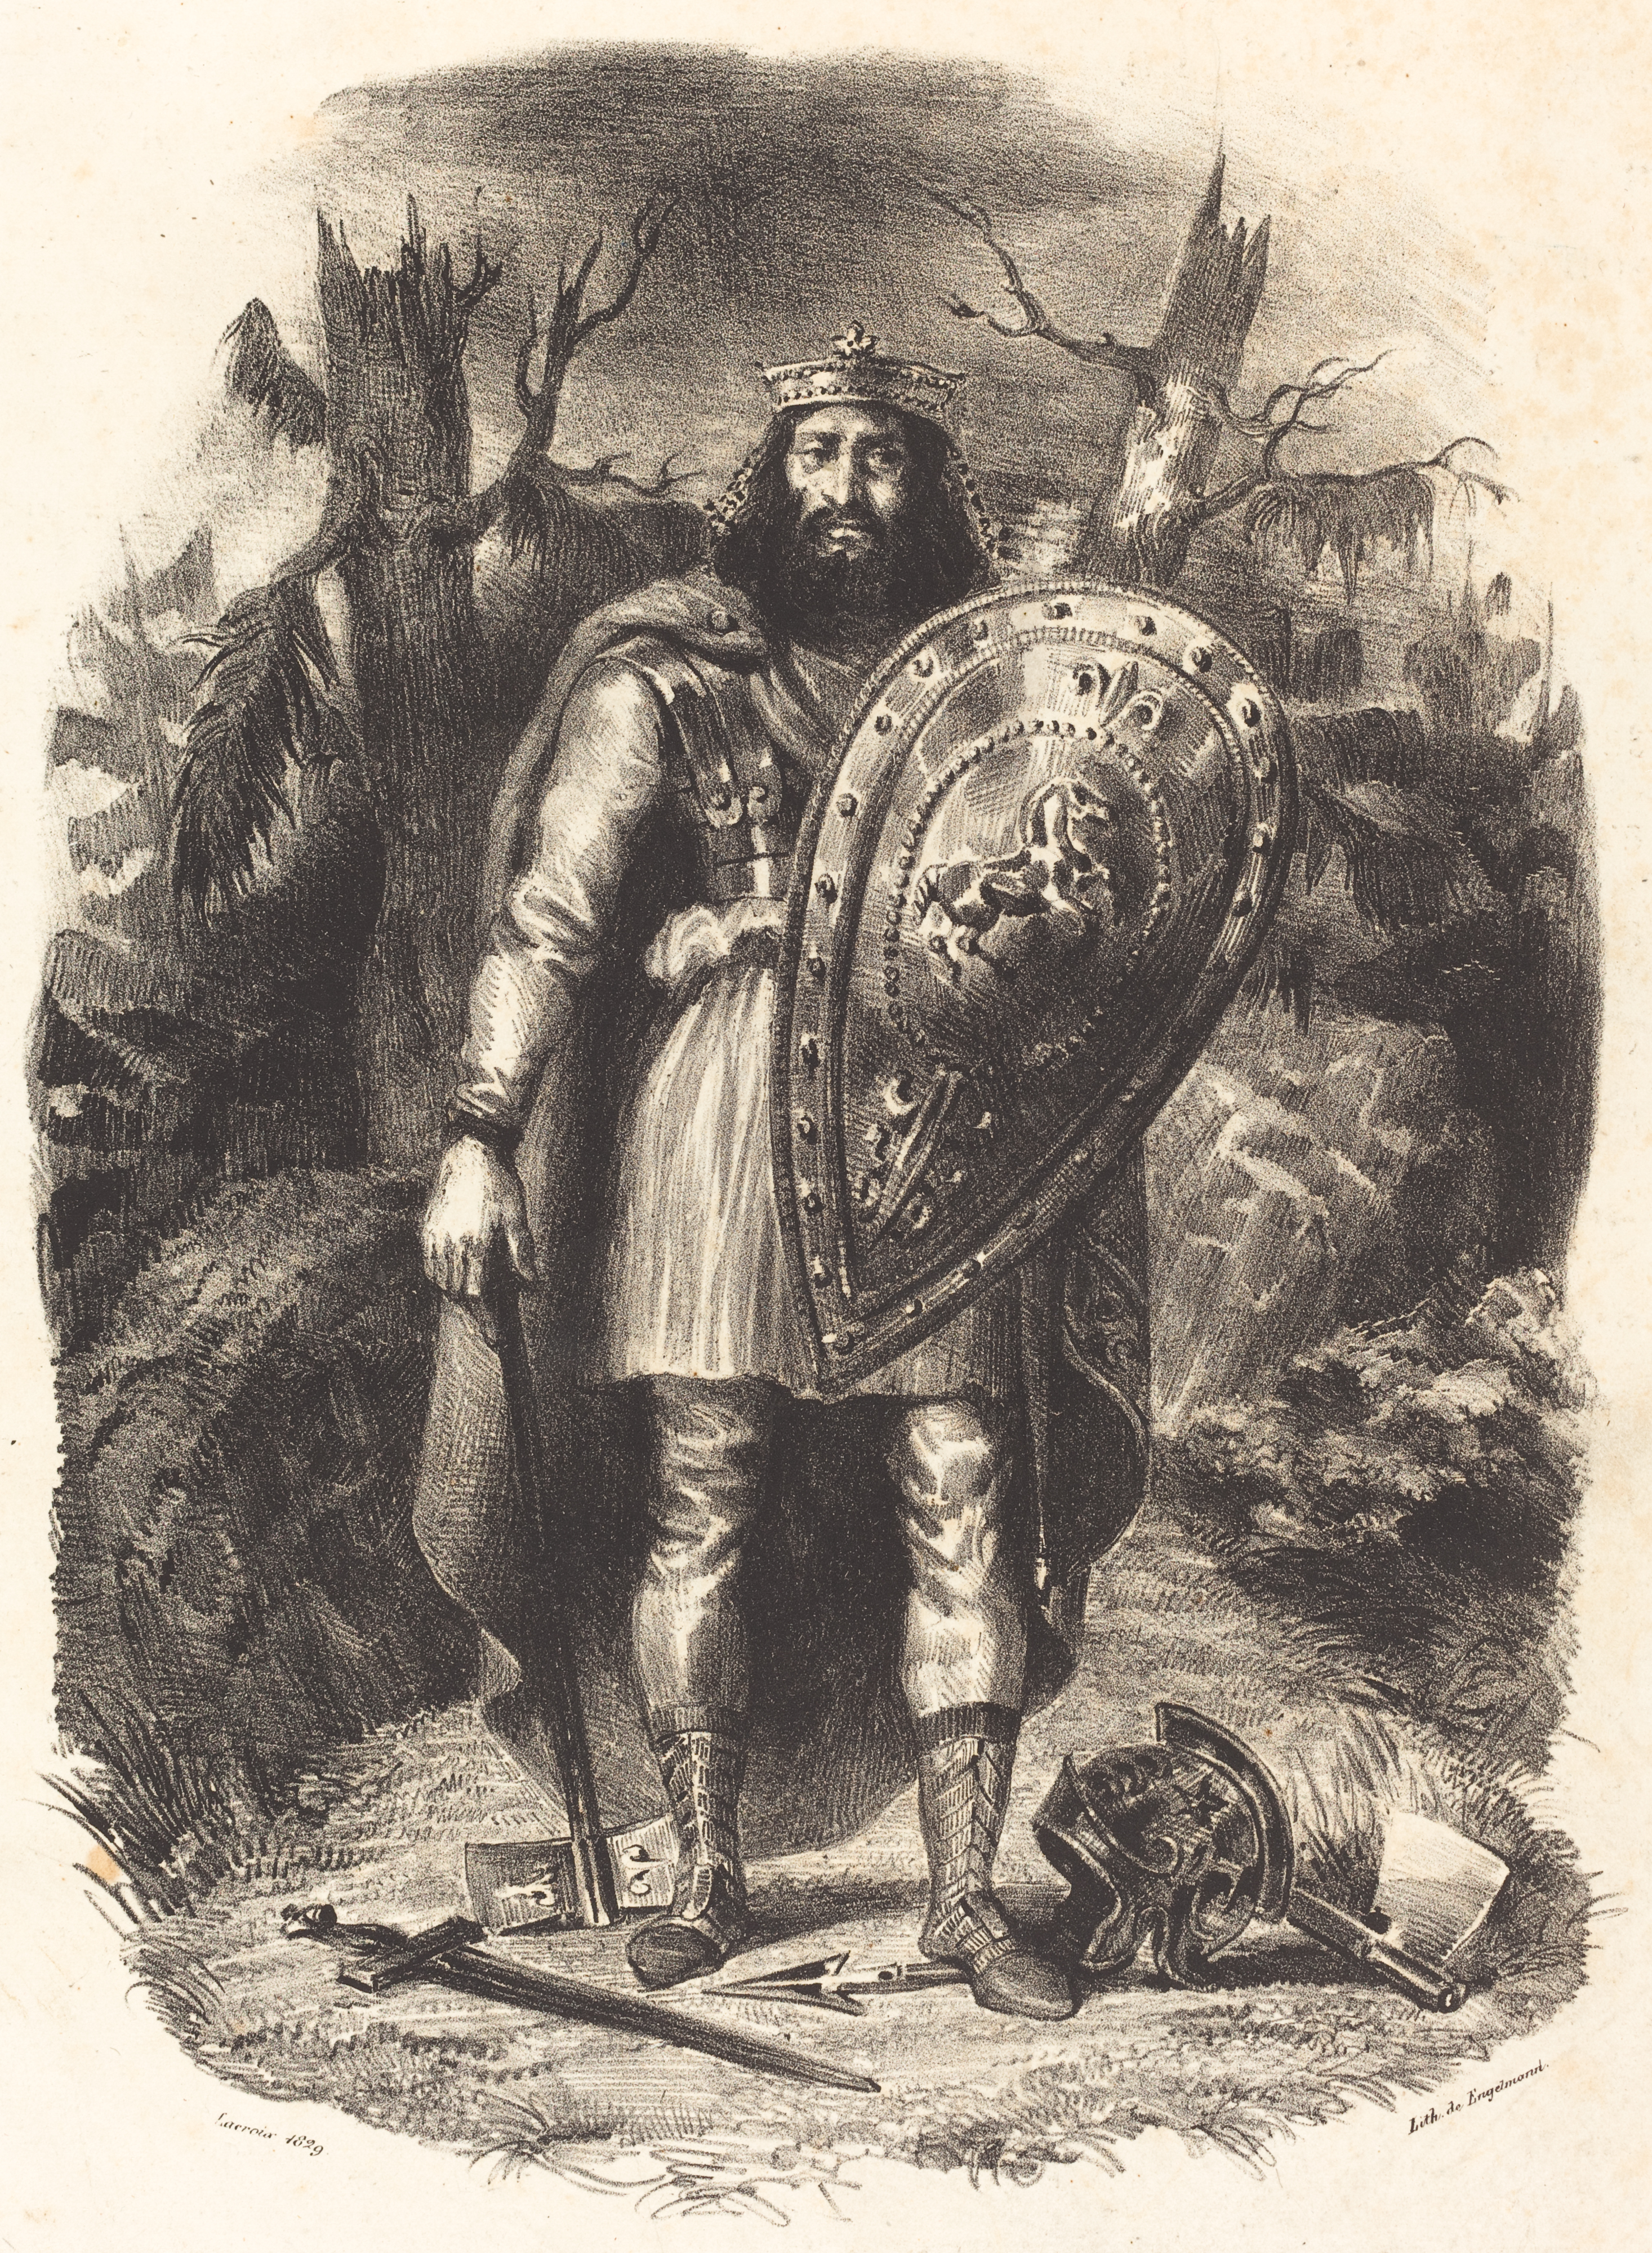 Vercingetorix (82BC-46 BC): Heroic Galic Chieftain and His Struggle Against Rome